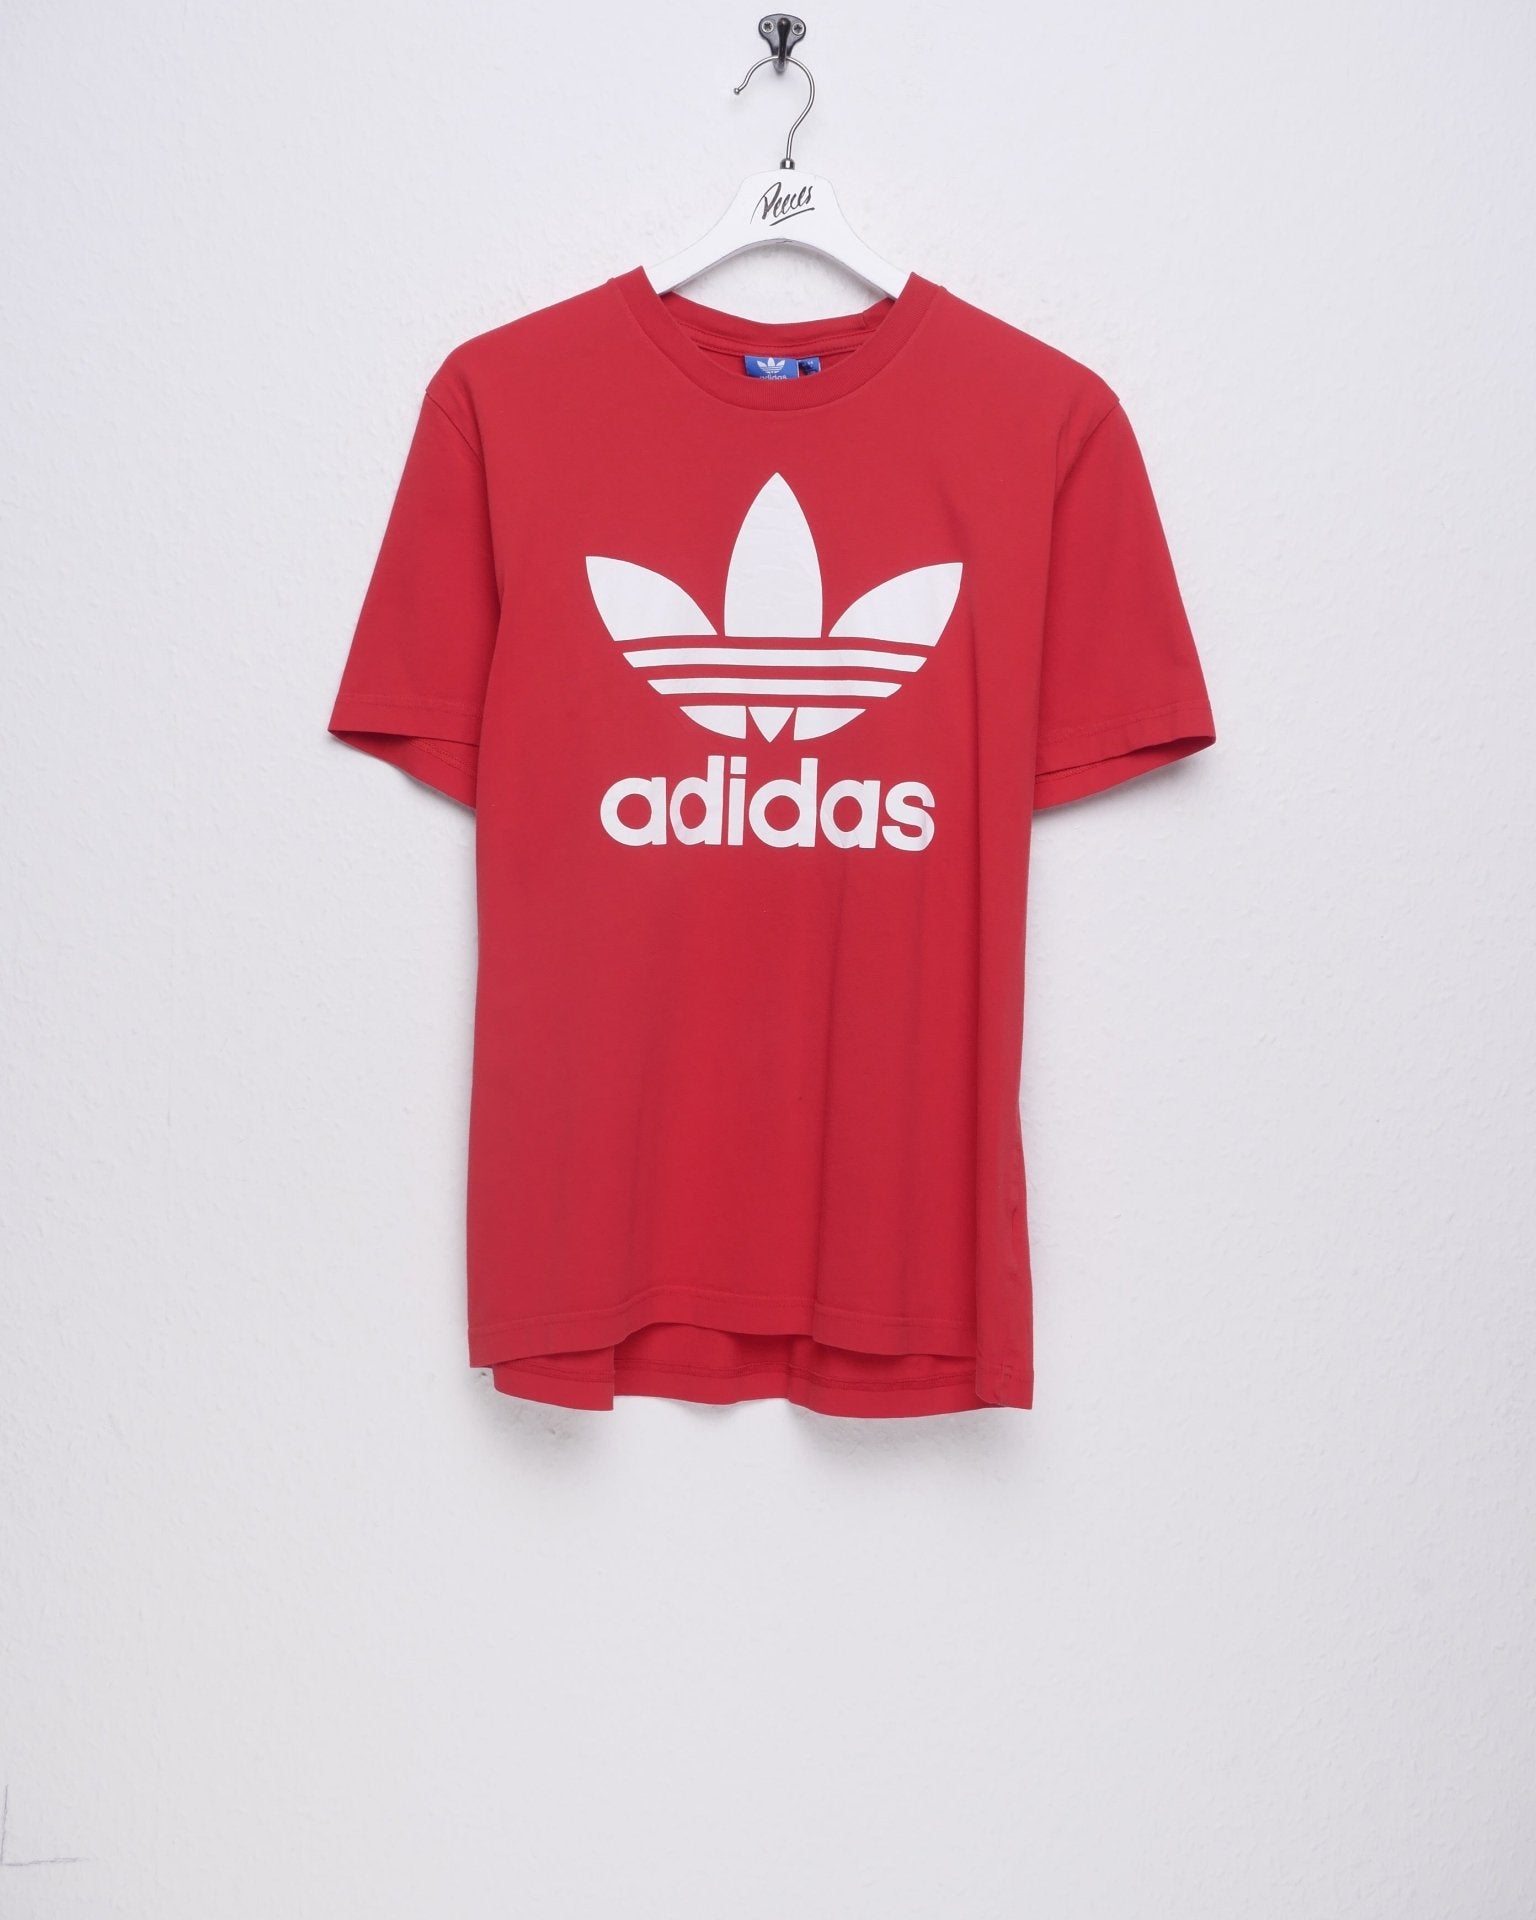 Adidas printed Logo Shirt - Peeces